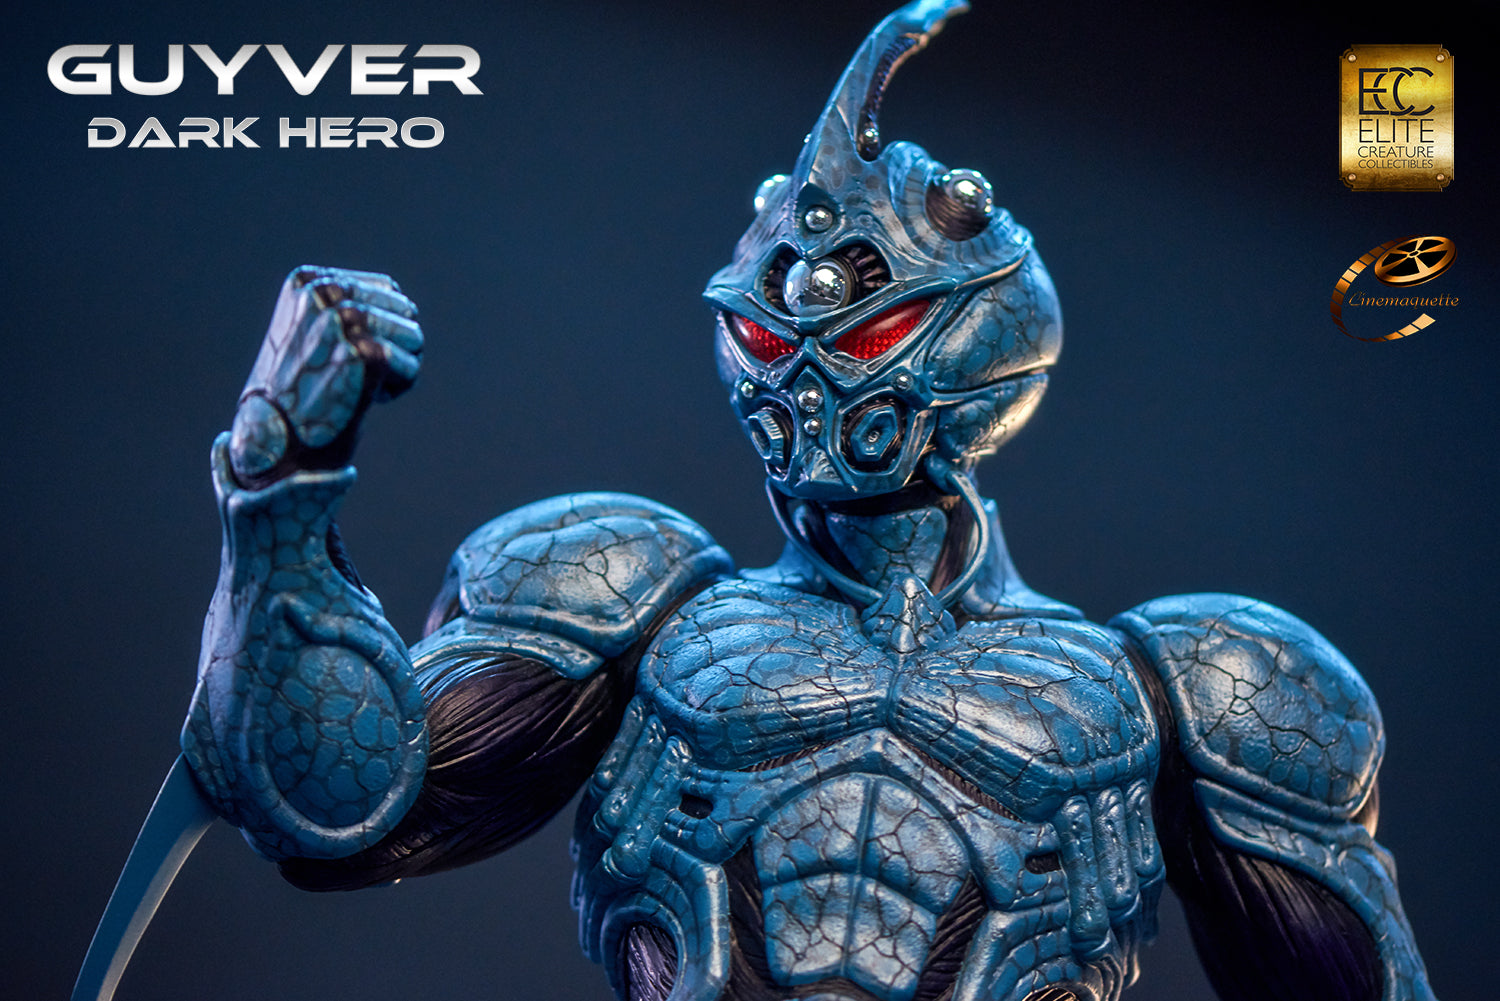 Elite Creature Collectibles - Guyver: Dark Hero - Guyver 1:3 Scale Maquette - Marvelous Toys